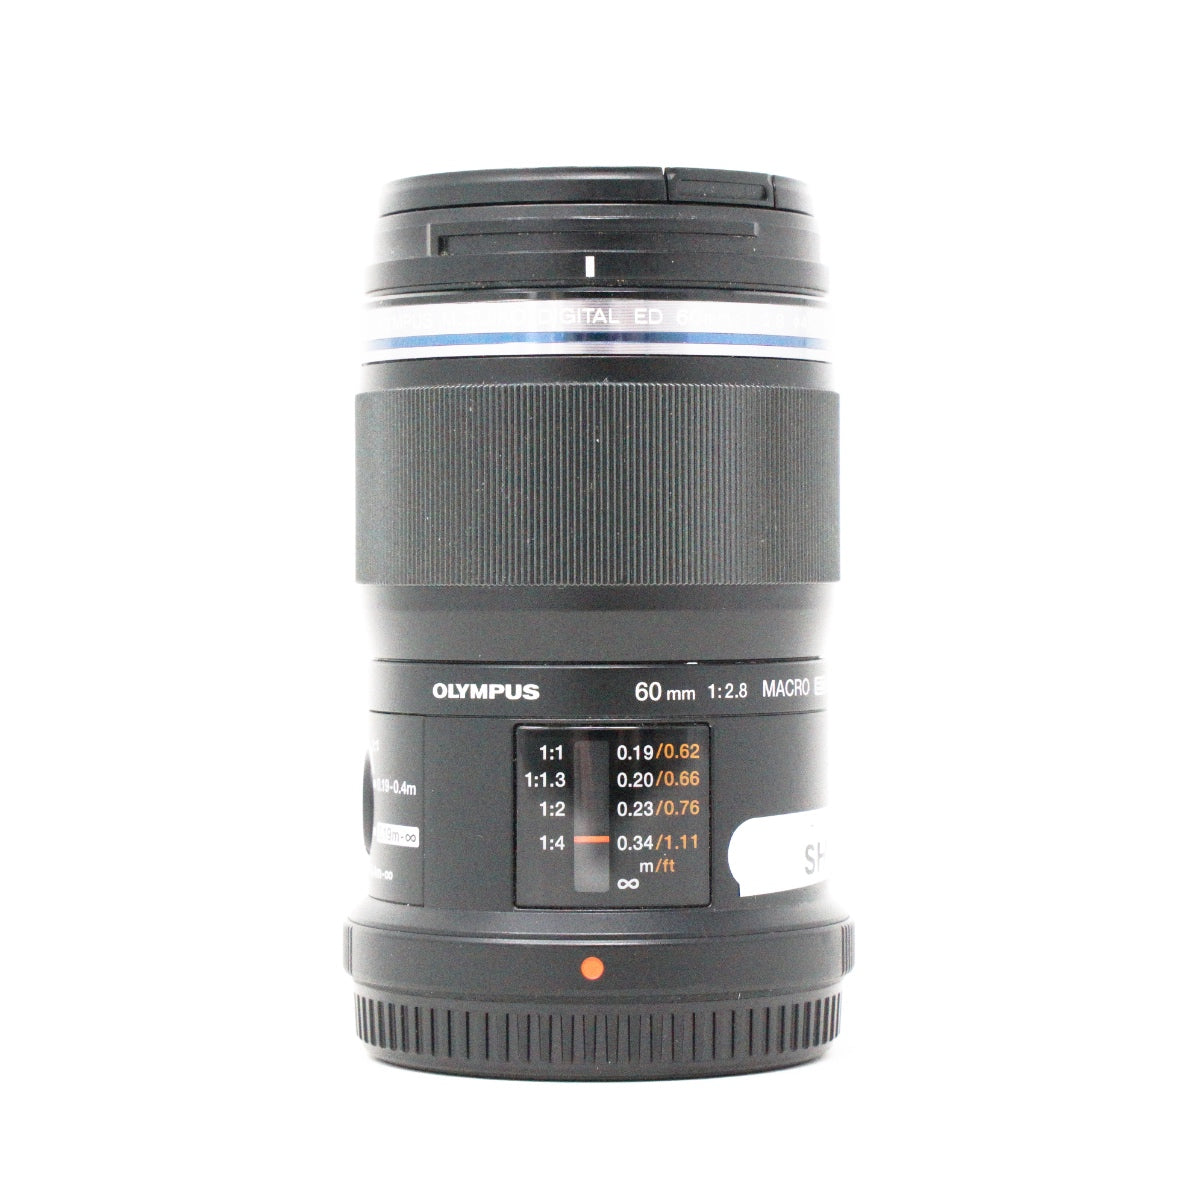 USED Olympus M.Zuiko Digital 60mm f2.8 ED Macro Lens